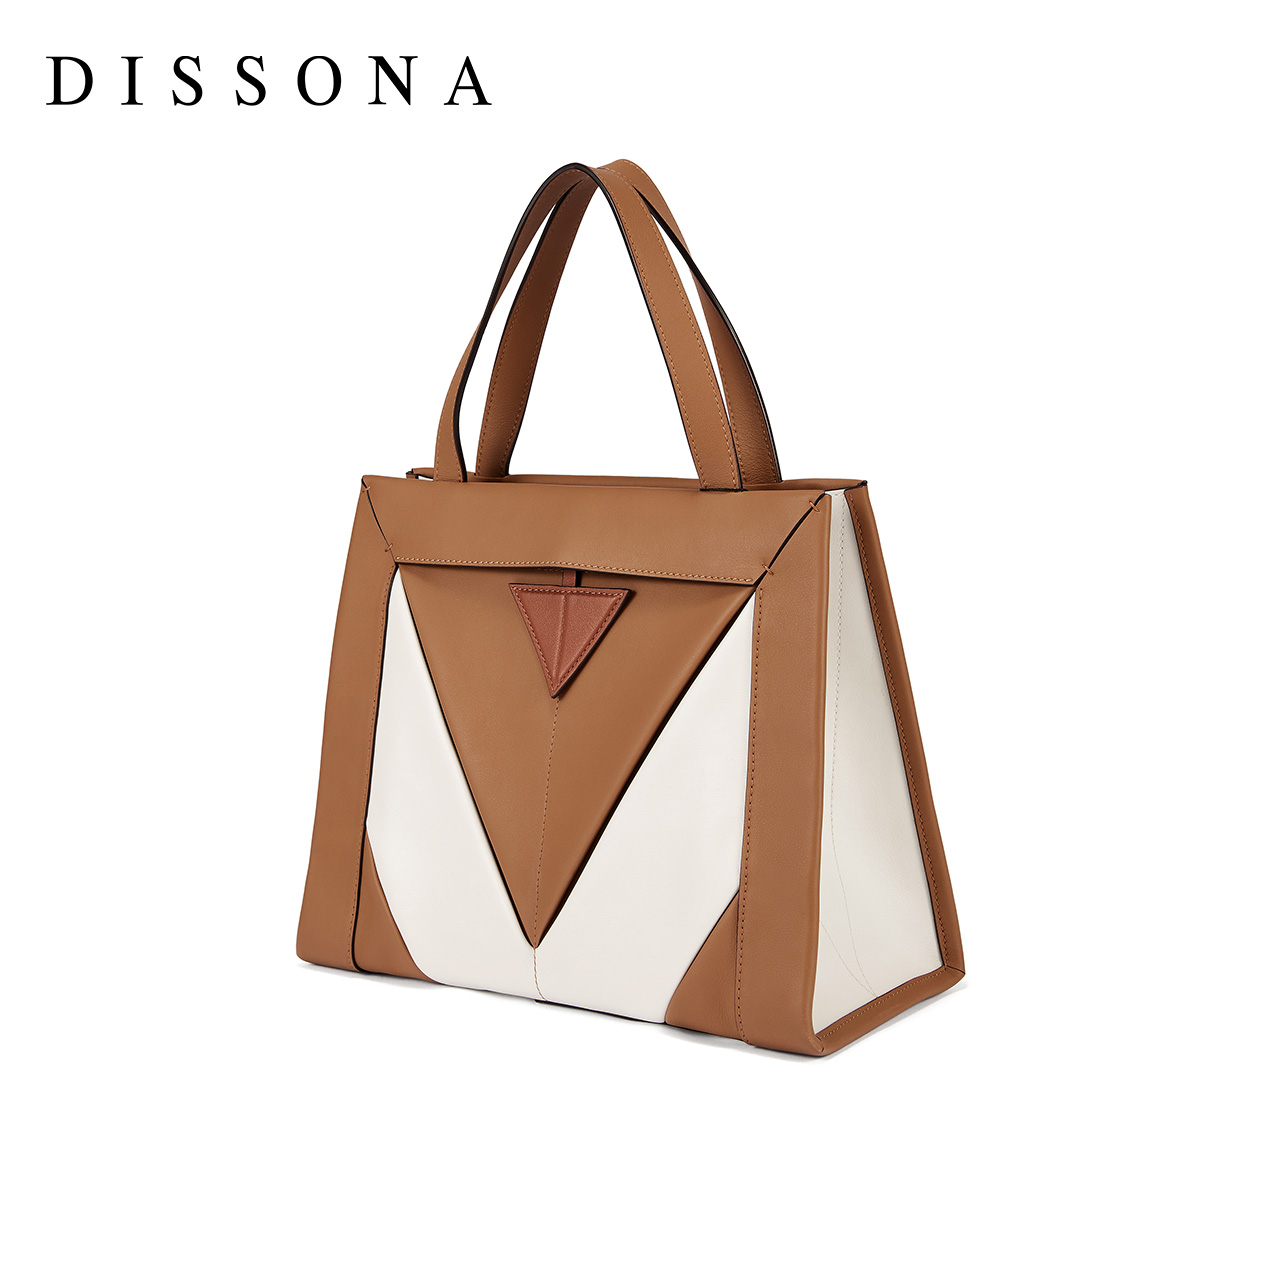 Dissona 2021 new handbag fashion Joker slung leather handbag 8204015802